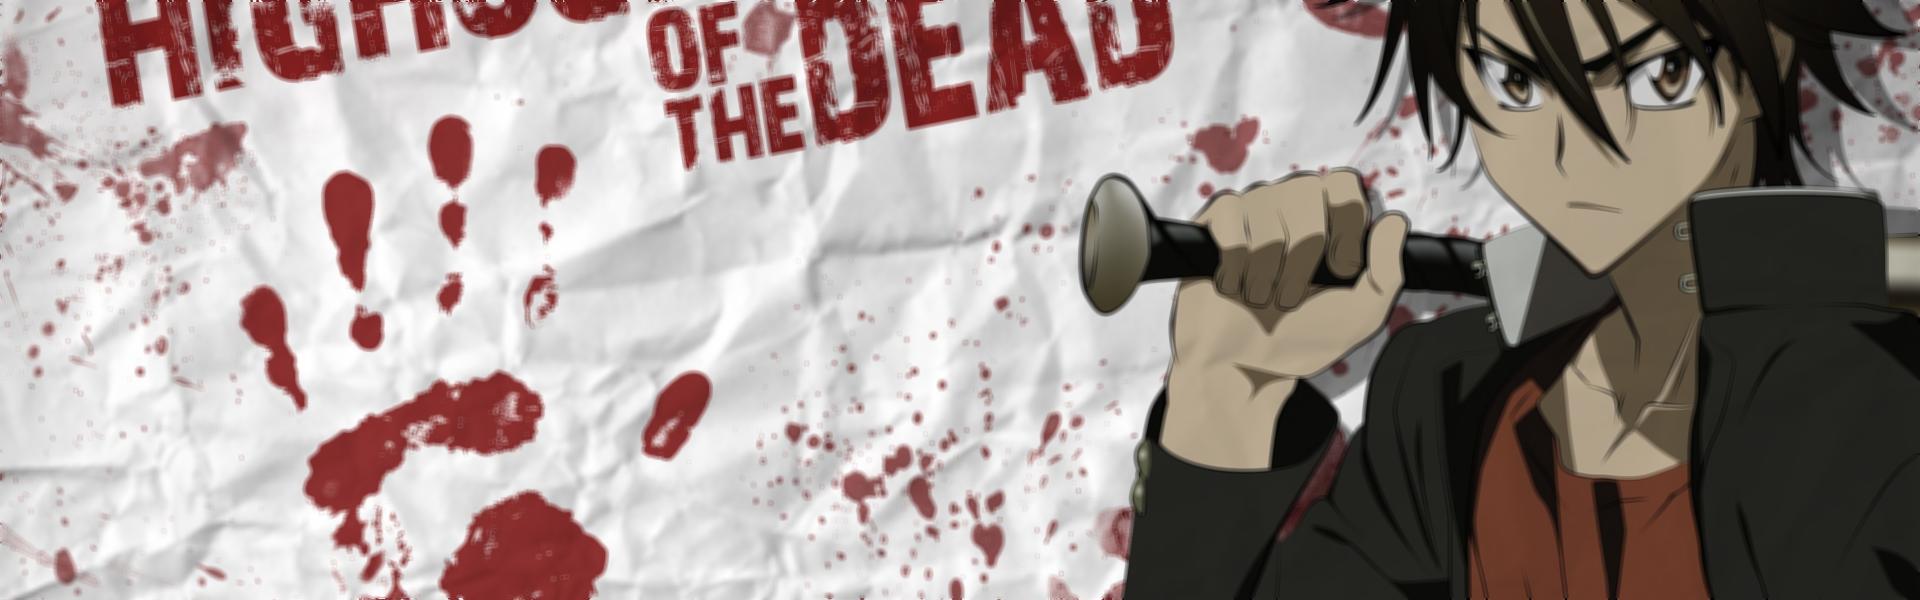 Highschool of the Dead 2 temtporada WILL HAVE Anime highschool of the dead  season 2 release h.o.t.d 